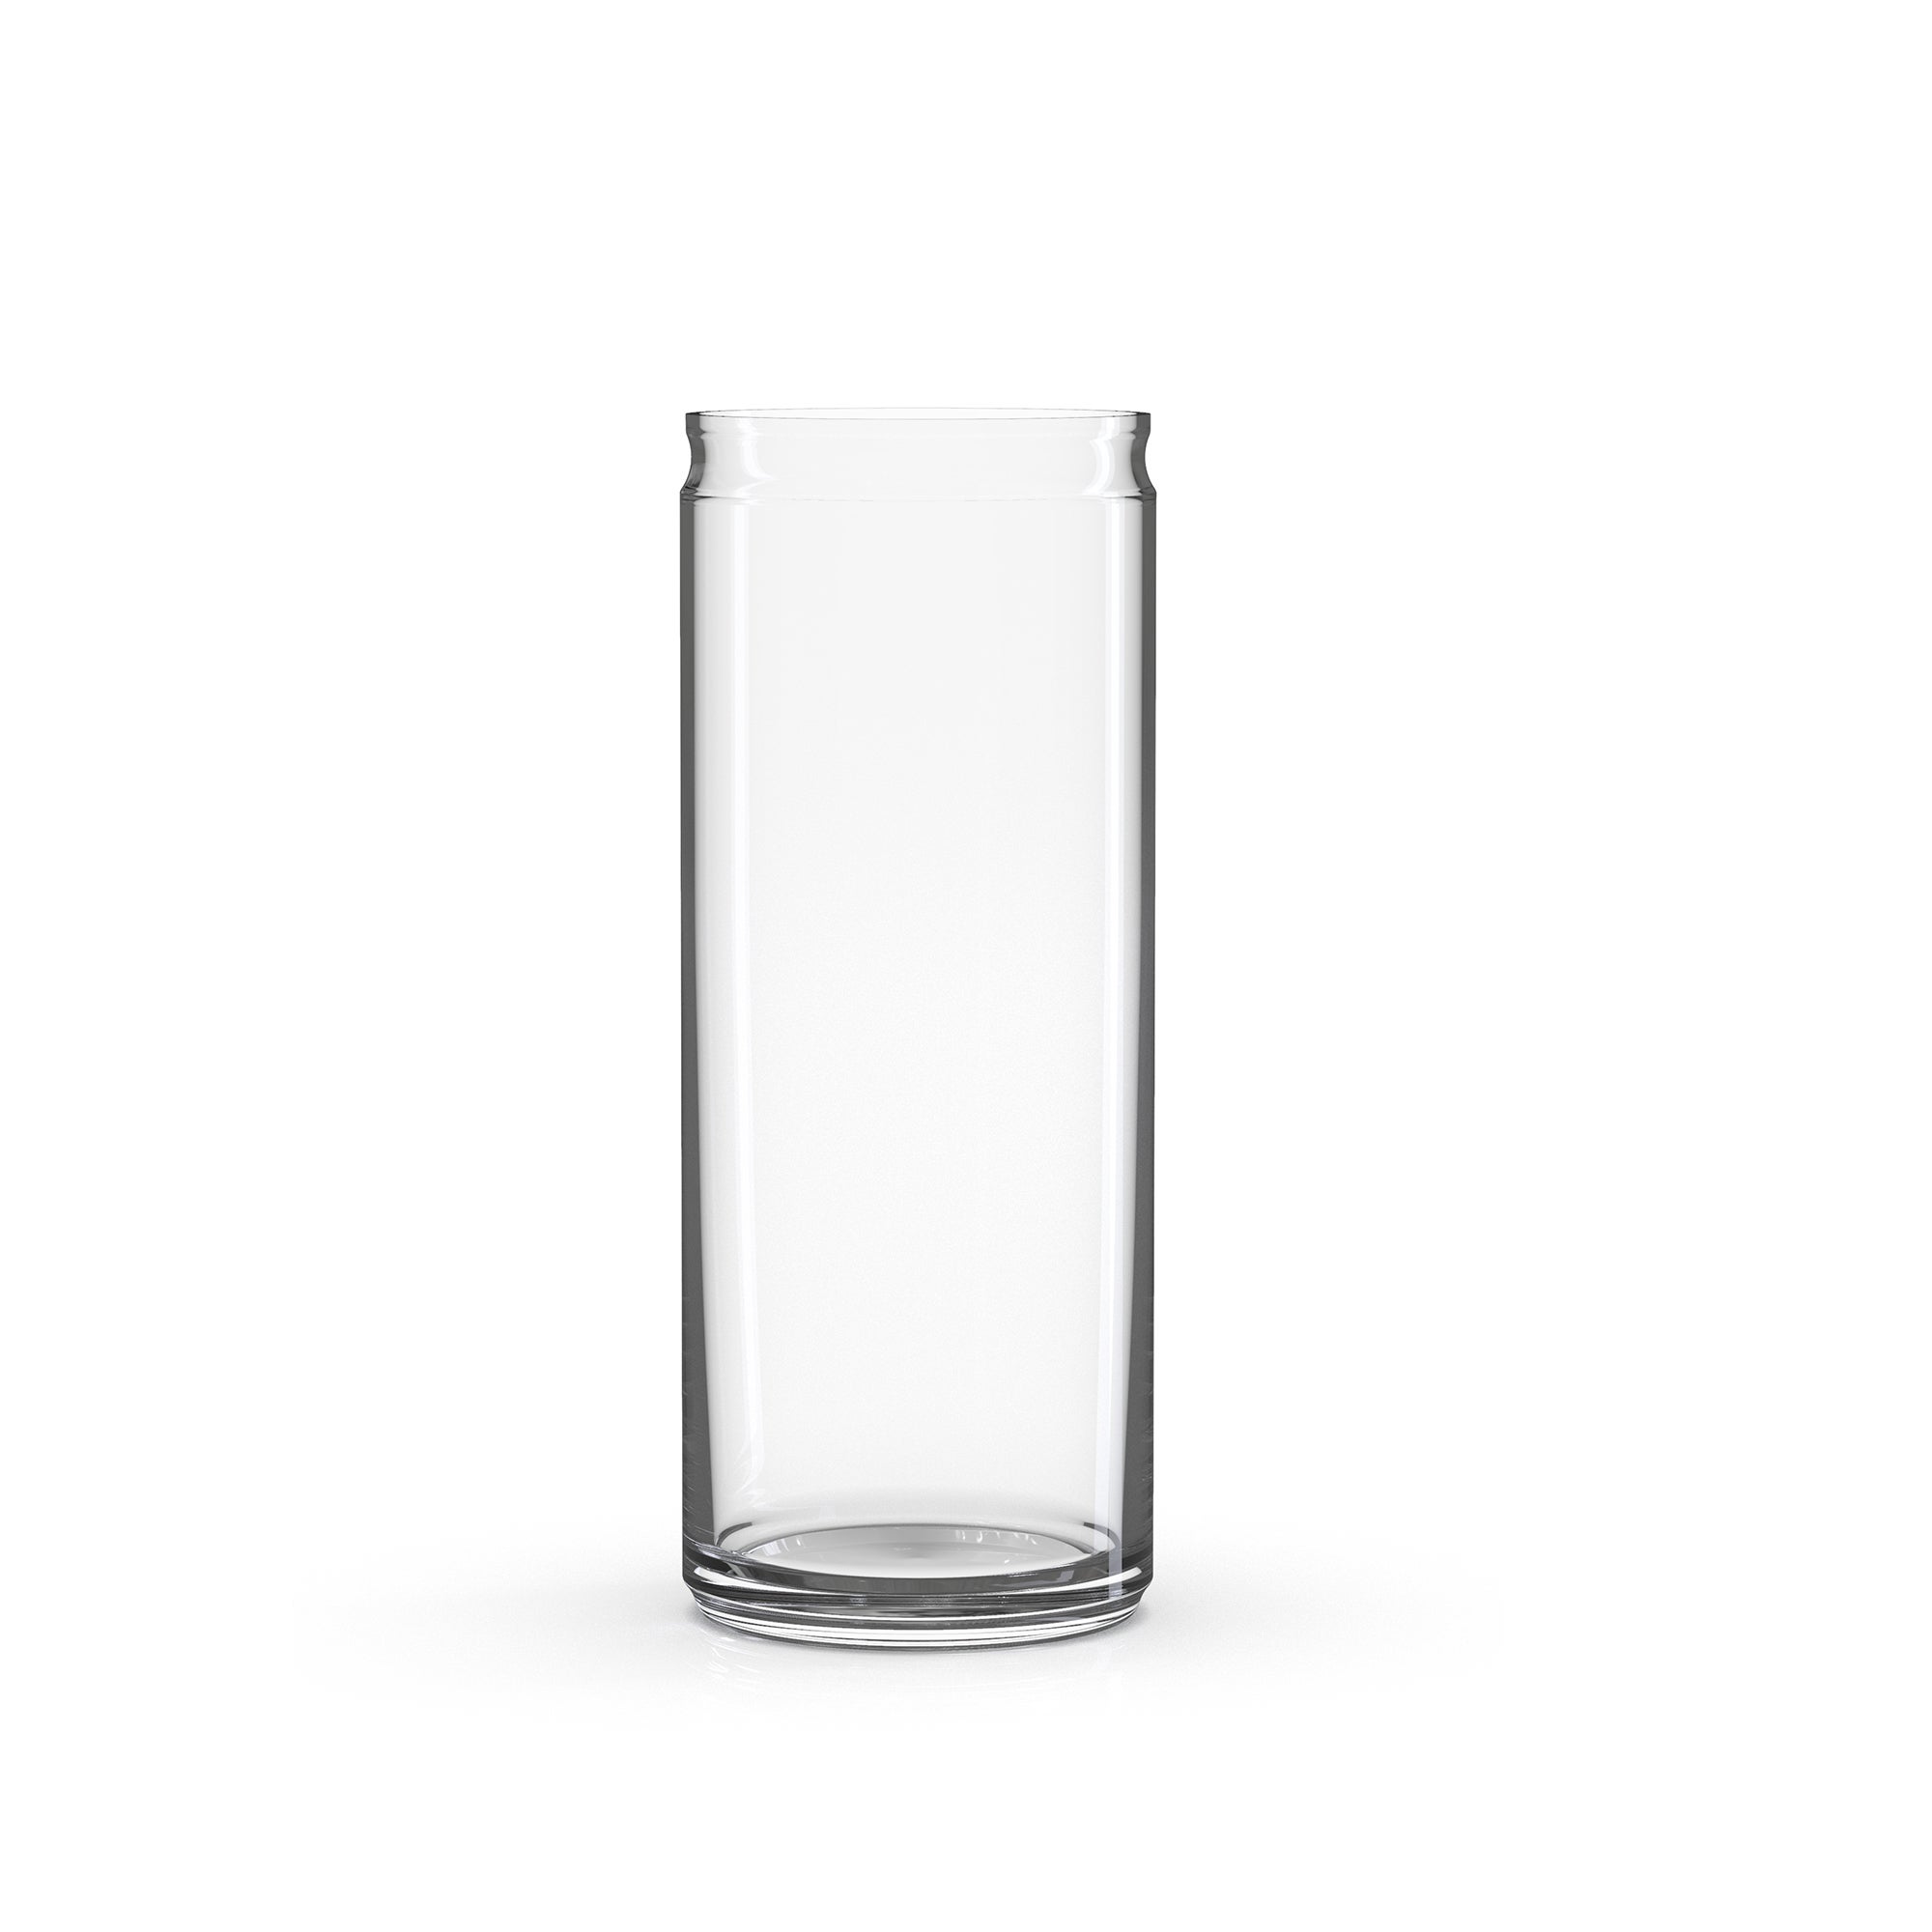 Glassware - Individual Glasses & Glasses Sets | Dunelm | Page 5